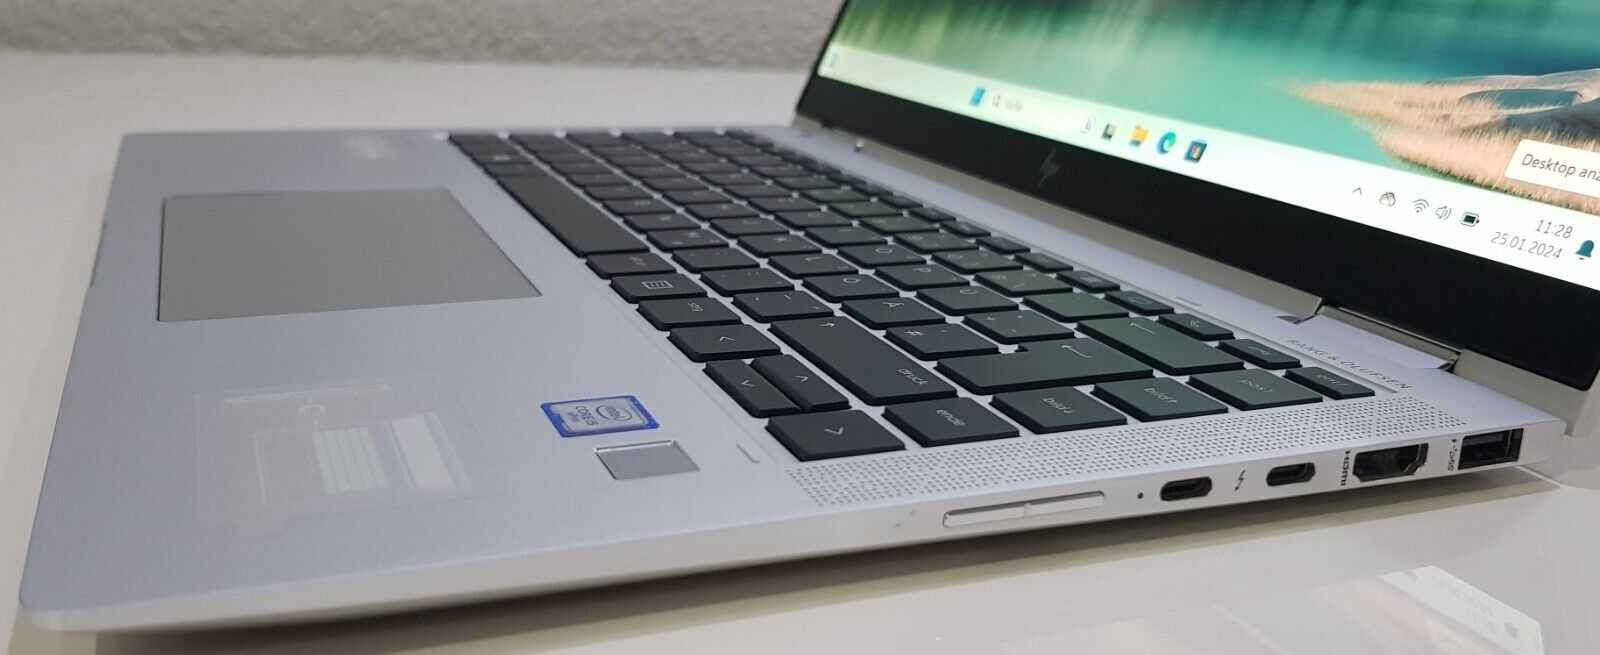 HP EliteBook x360 1040 G6 i5-8265u, 8GB RAM 256GB SSD Touchscreen FHD